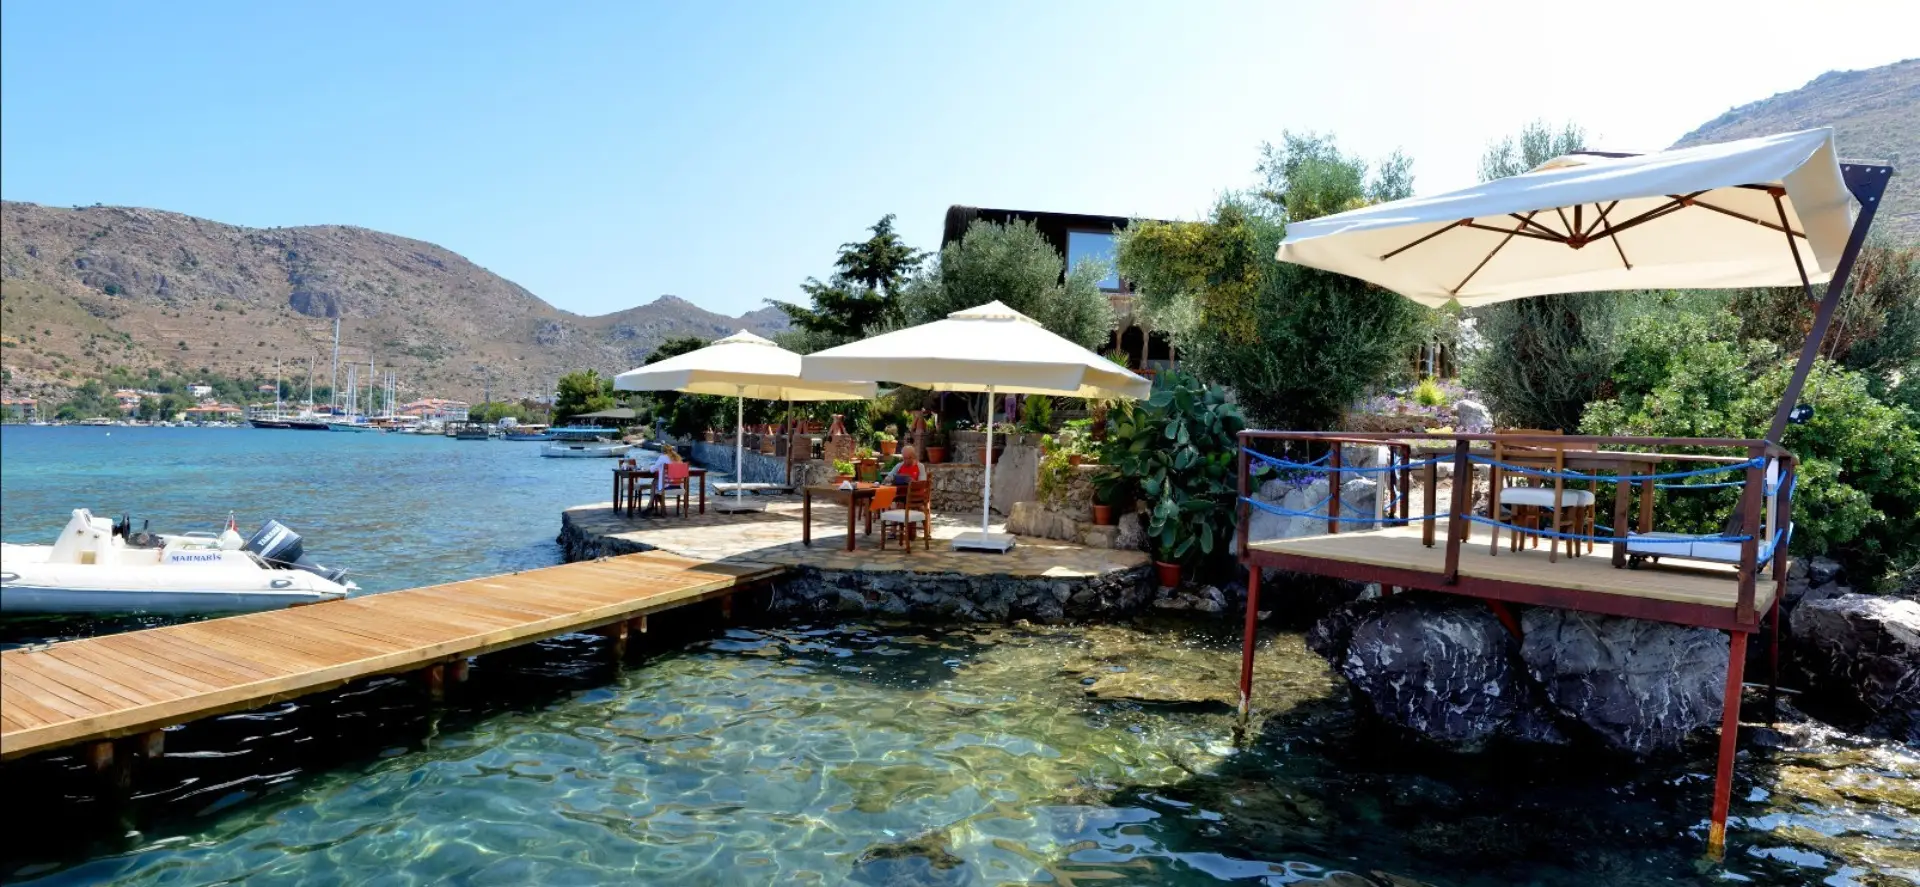 The Most Beautiful Hotels in Selimiye and Bozburun